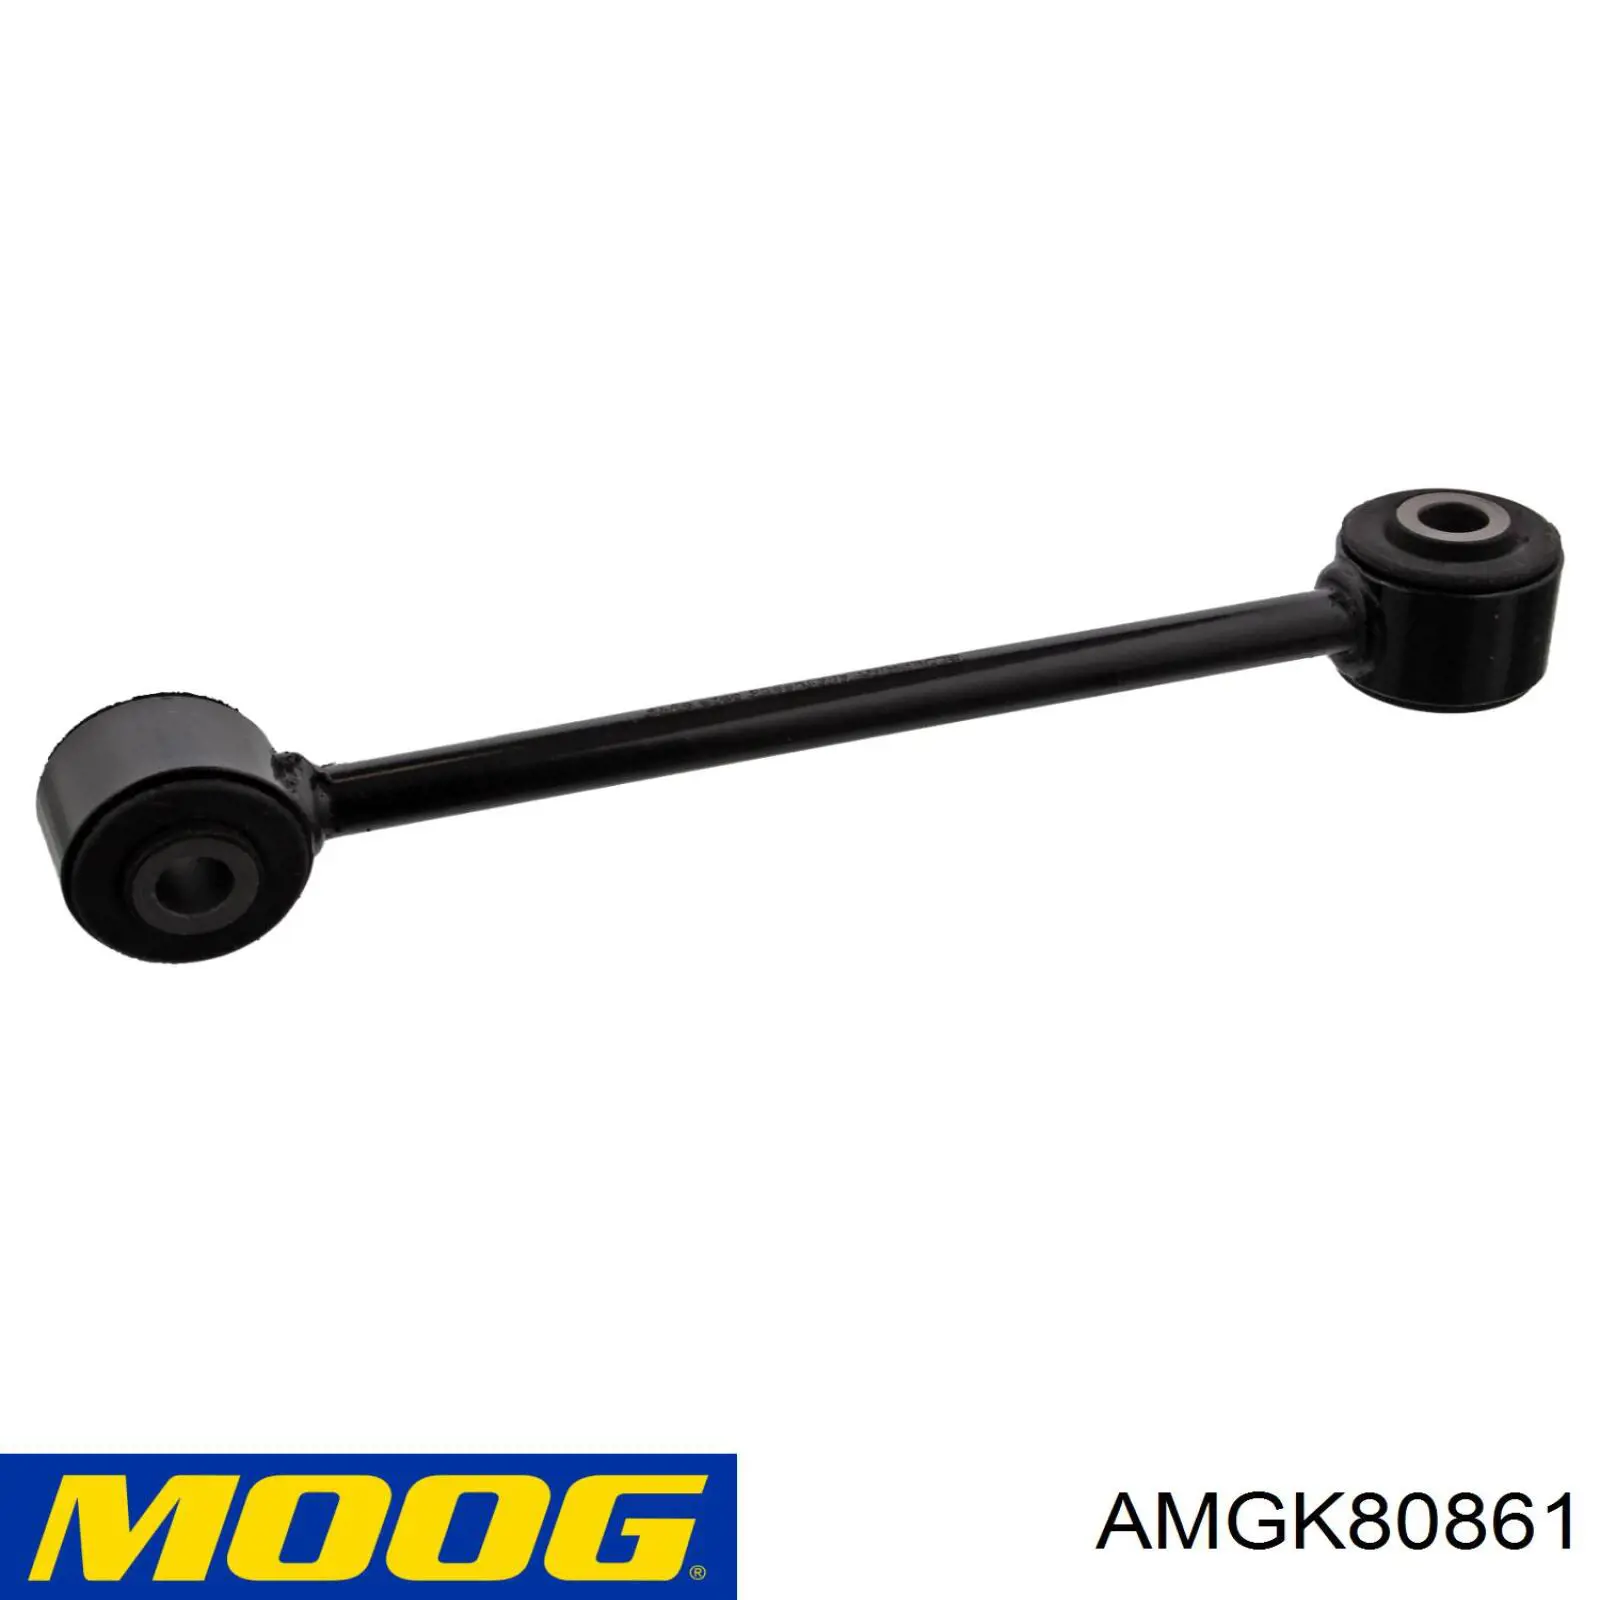 Soporte de barra estabilizadora delantera AMGK80861 Moog